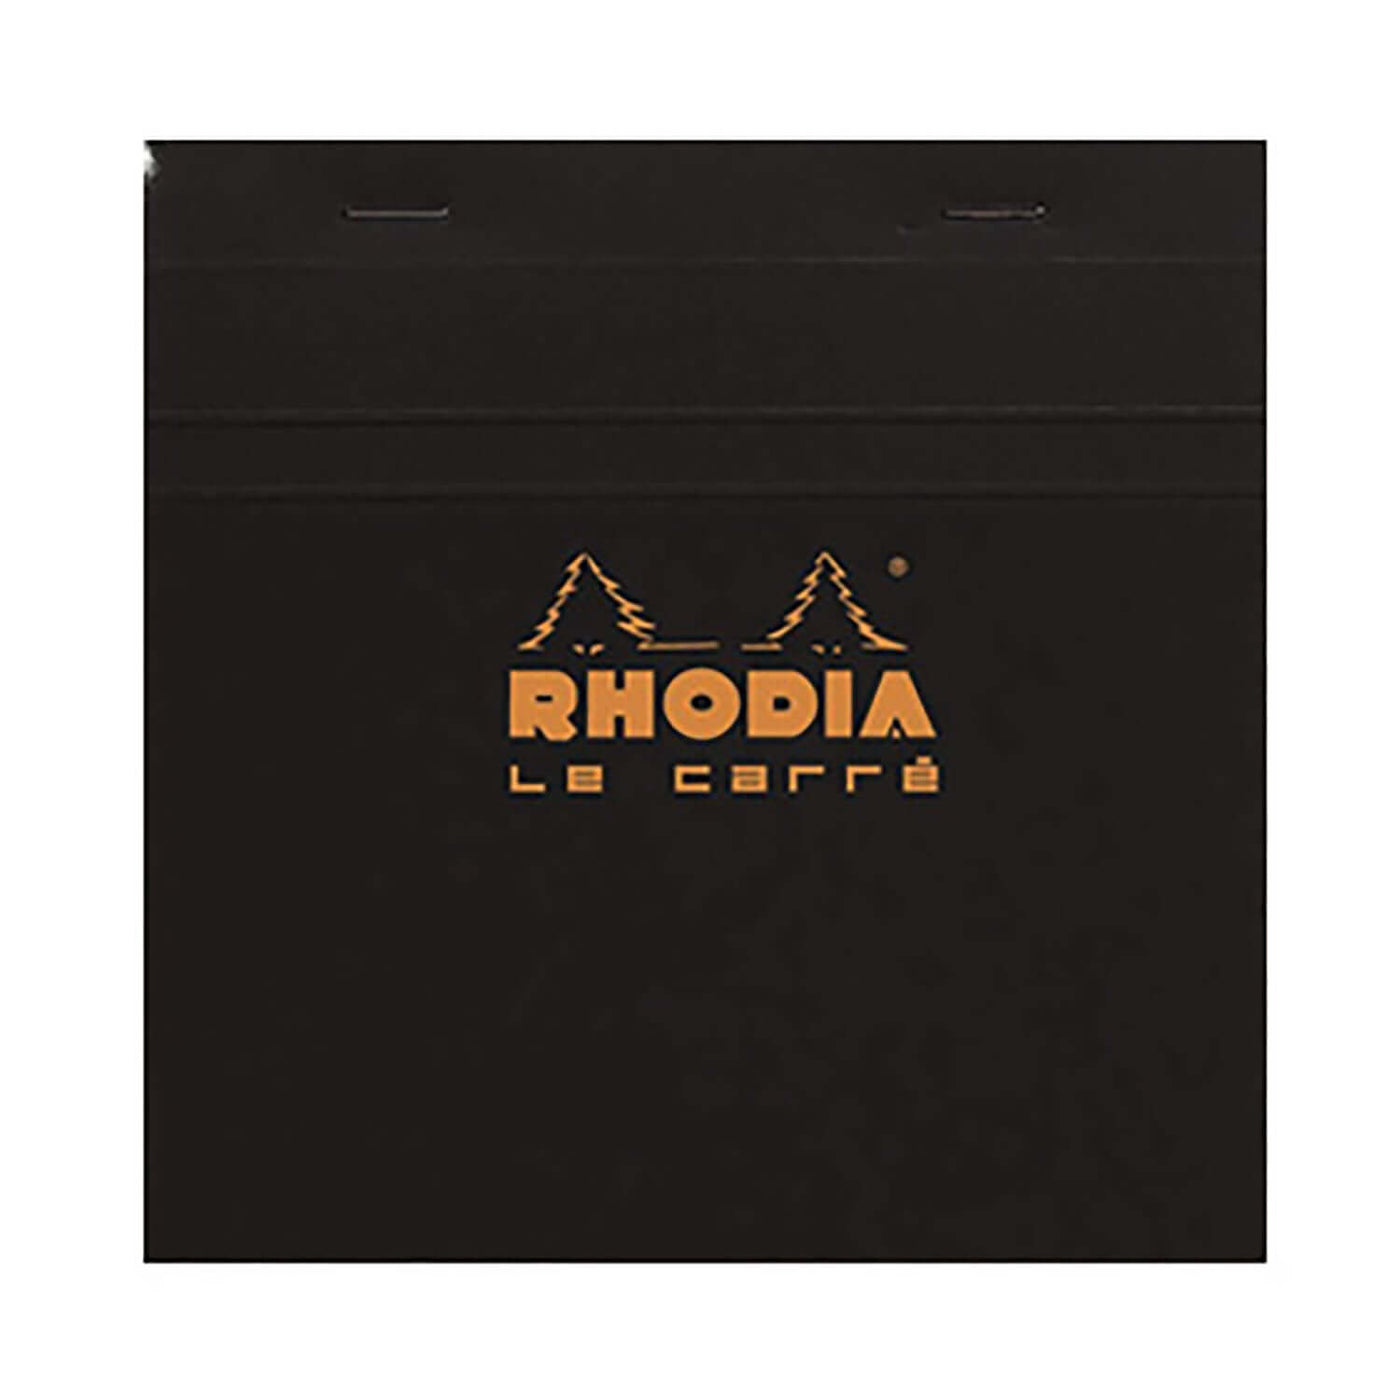 Rhodia Le Carre Notepad, Black - Ruled 2